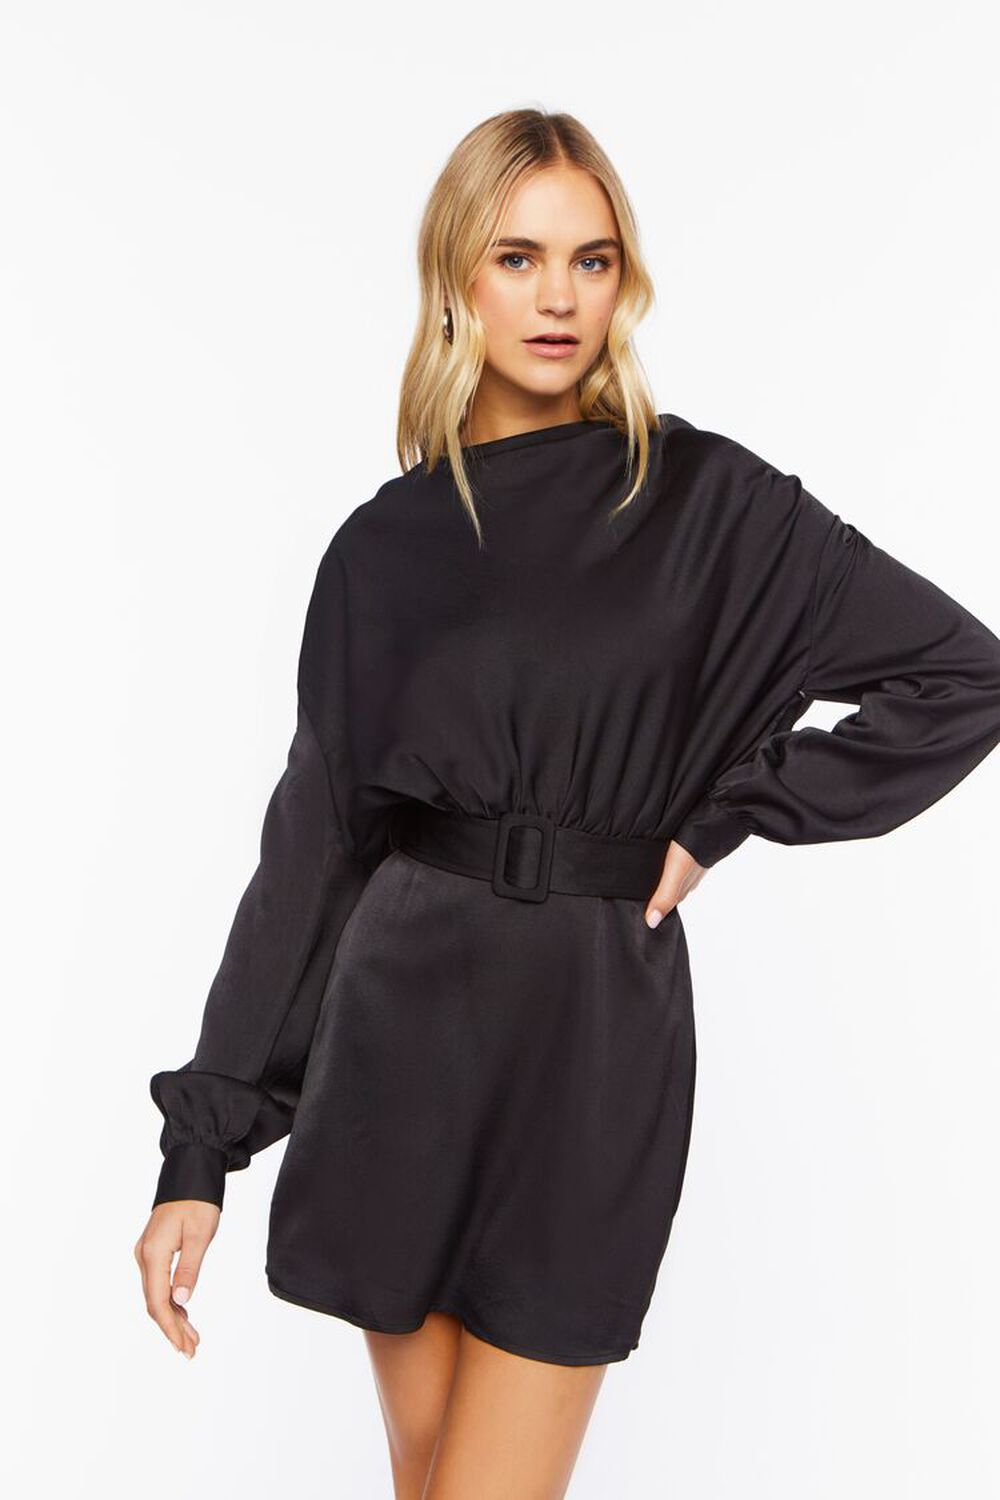 BLACK Satin Belted Drop-Sleeve Mini Dress, image 1